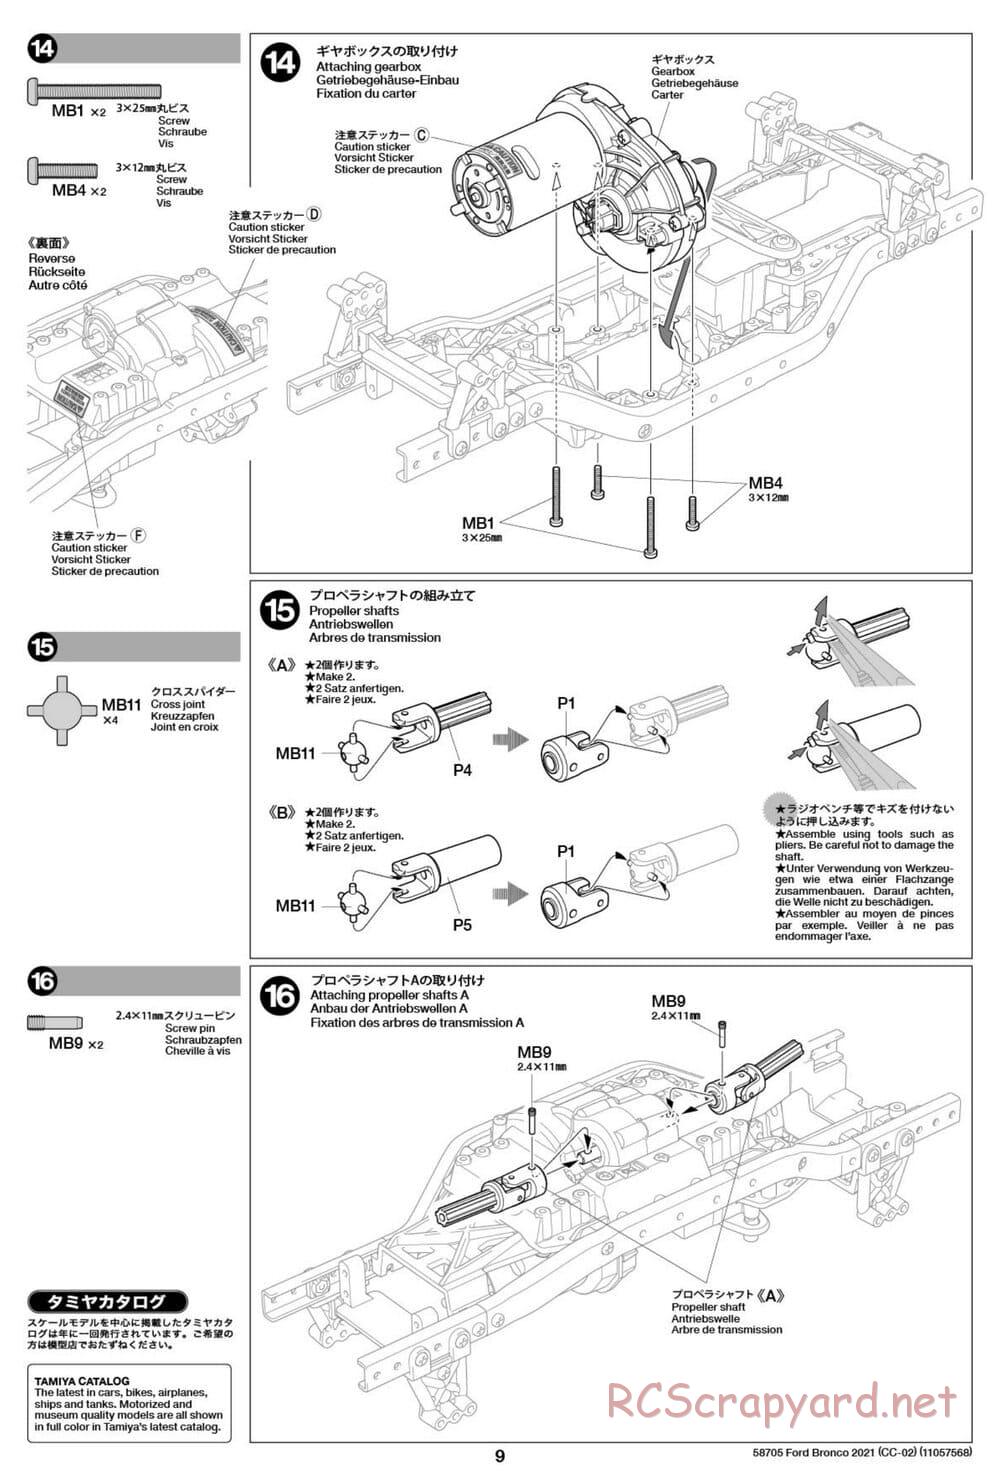 Tamiya - Ford Bronco 2021 - CC-02 Chassis - Manual - Page 9